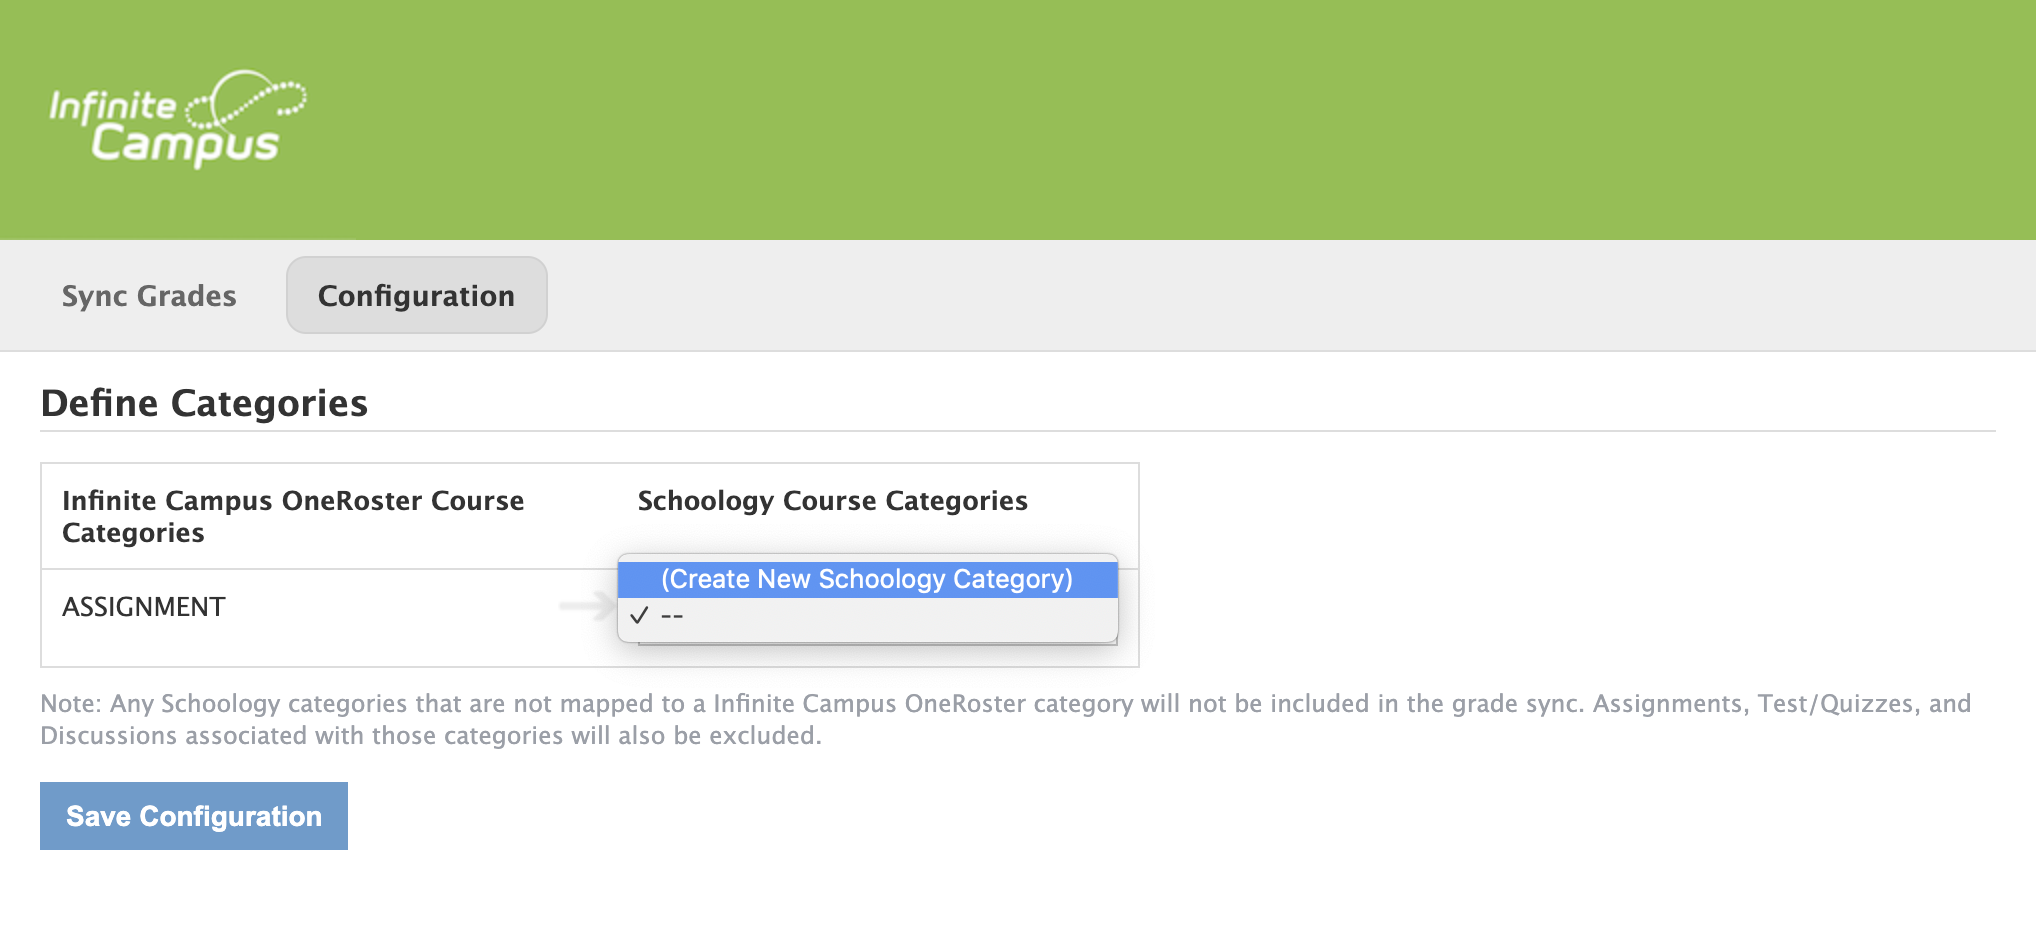 Infinite Campus Define Categories screen example.